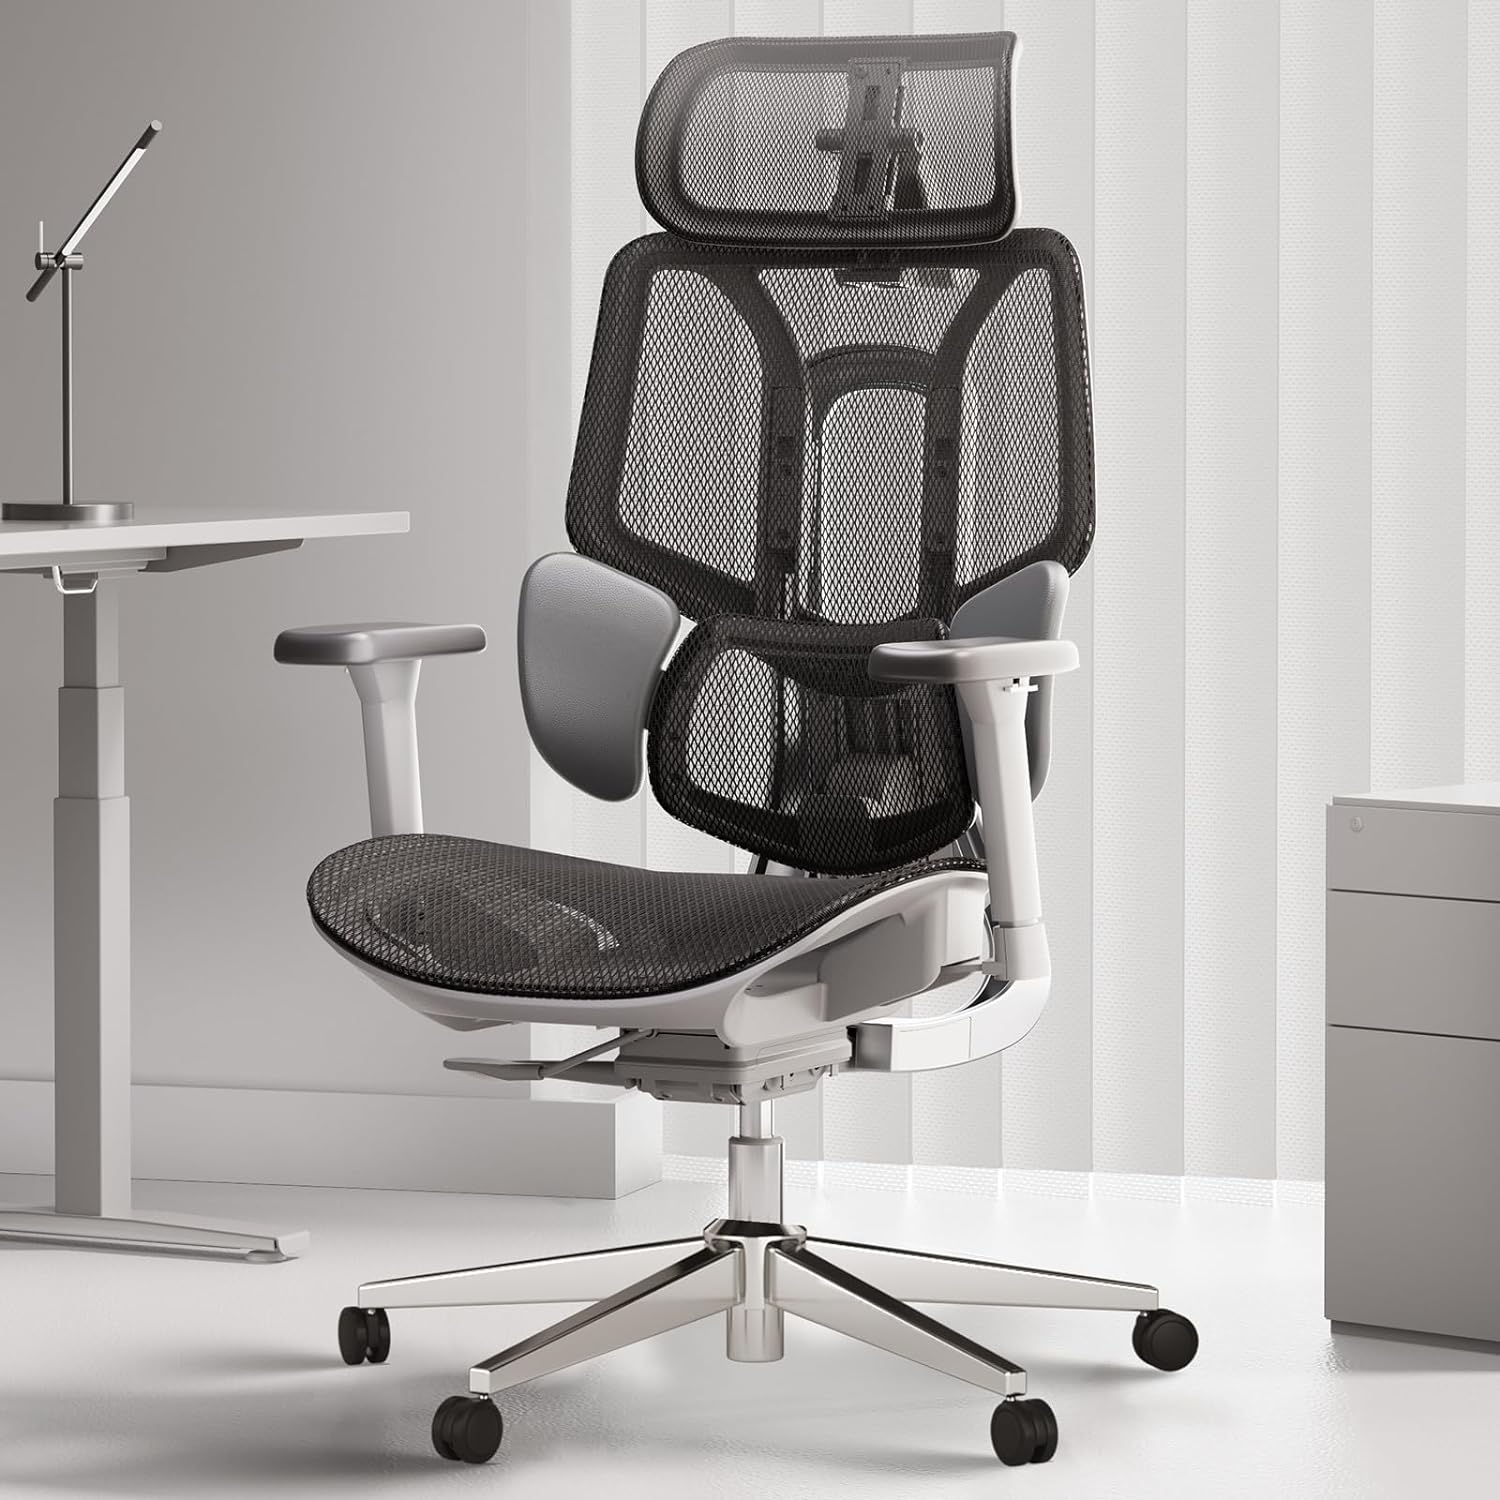 HBADA E3 Ergonomic Office Chair (Without footrest) -Black